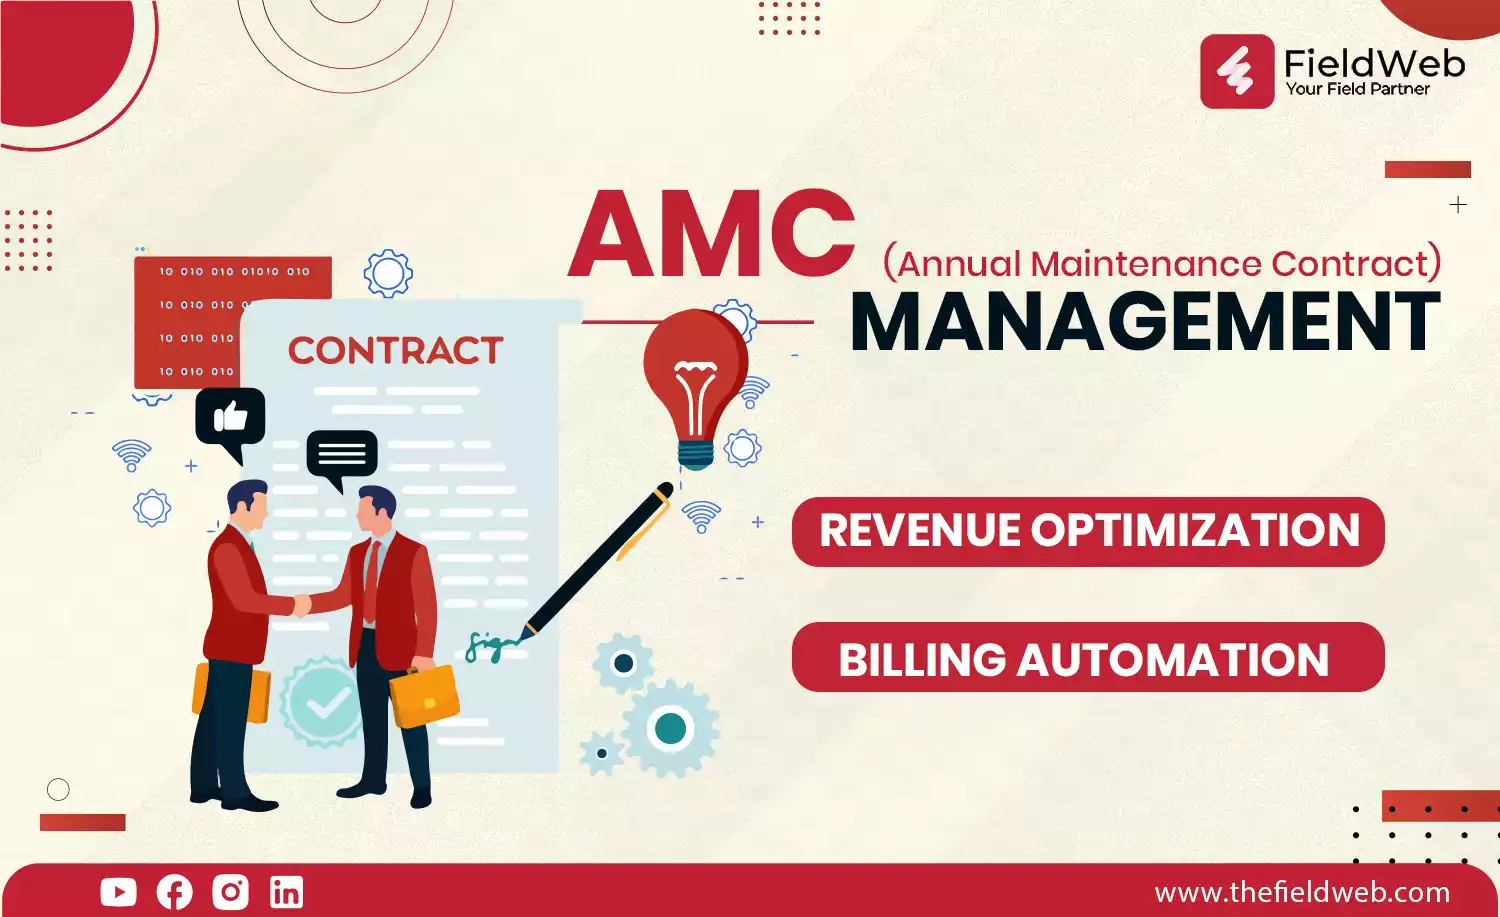 image is displaying AMC management